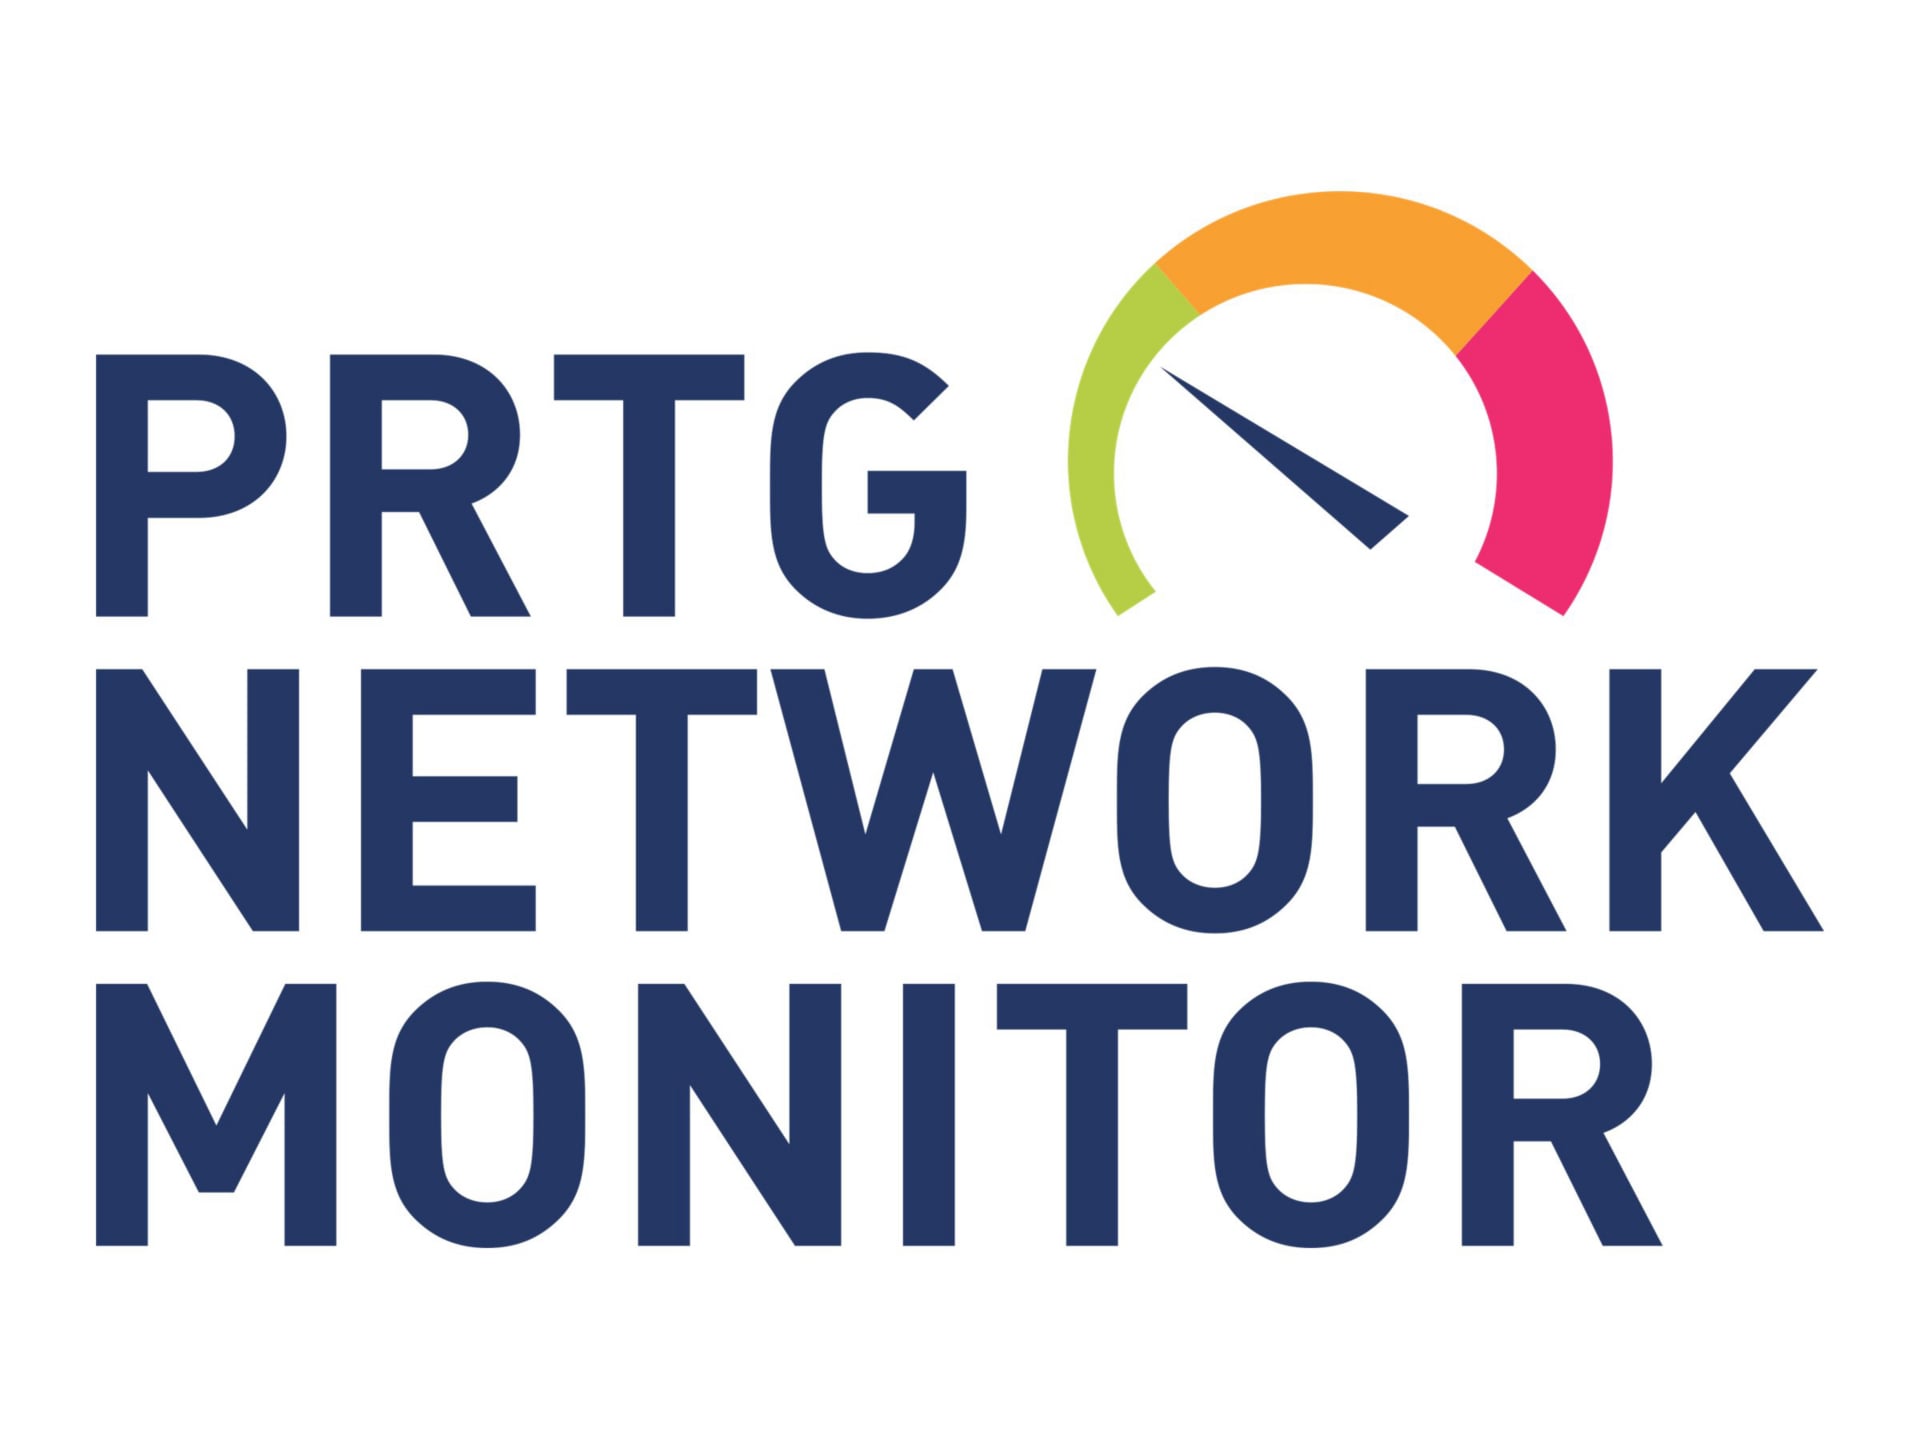 PRTG Network Monitor Unlimited - upgrade license + 1 Year Maintenance - unlimited sensors